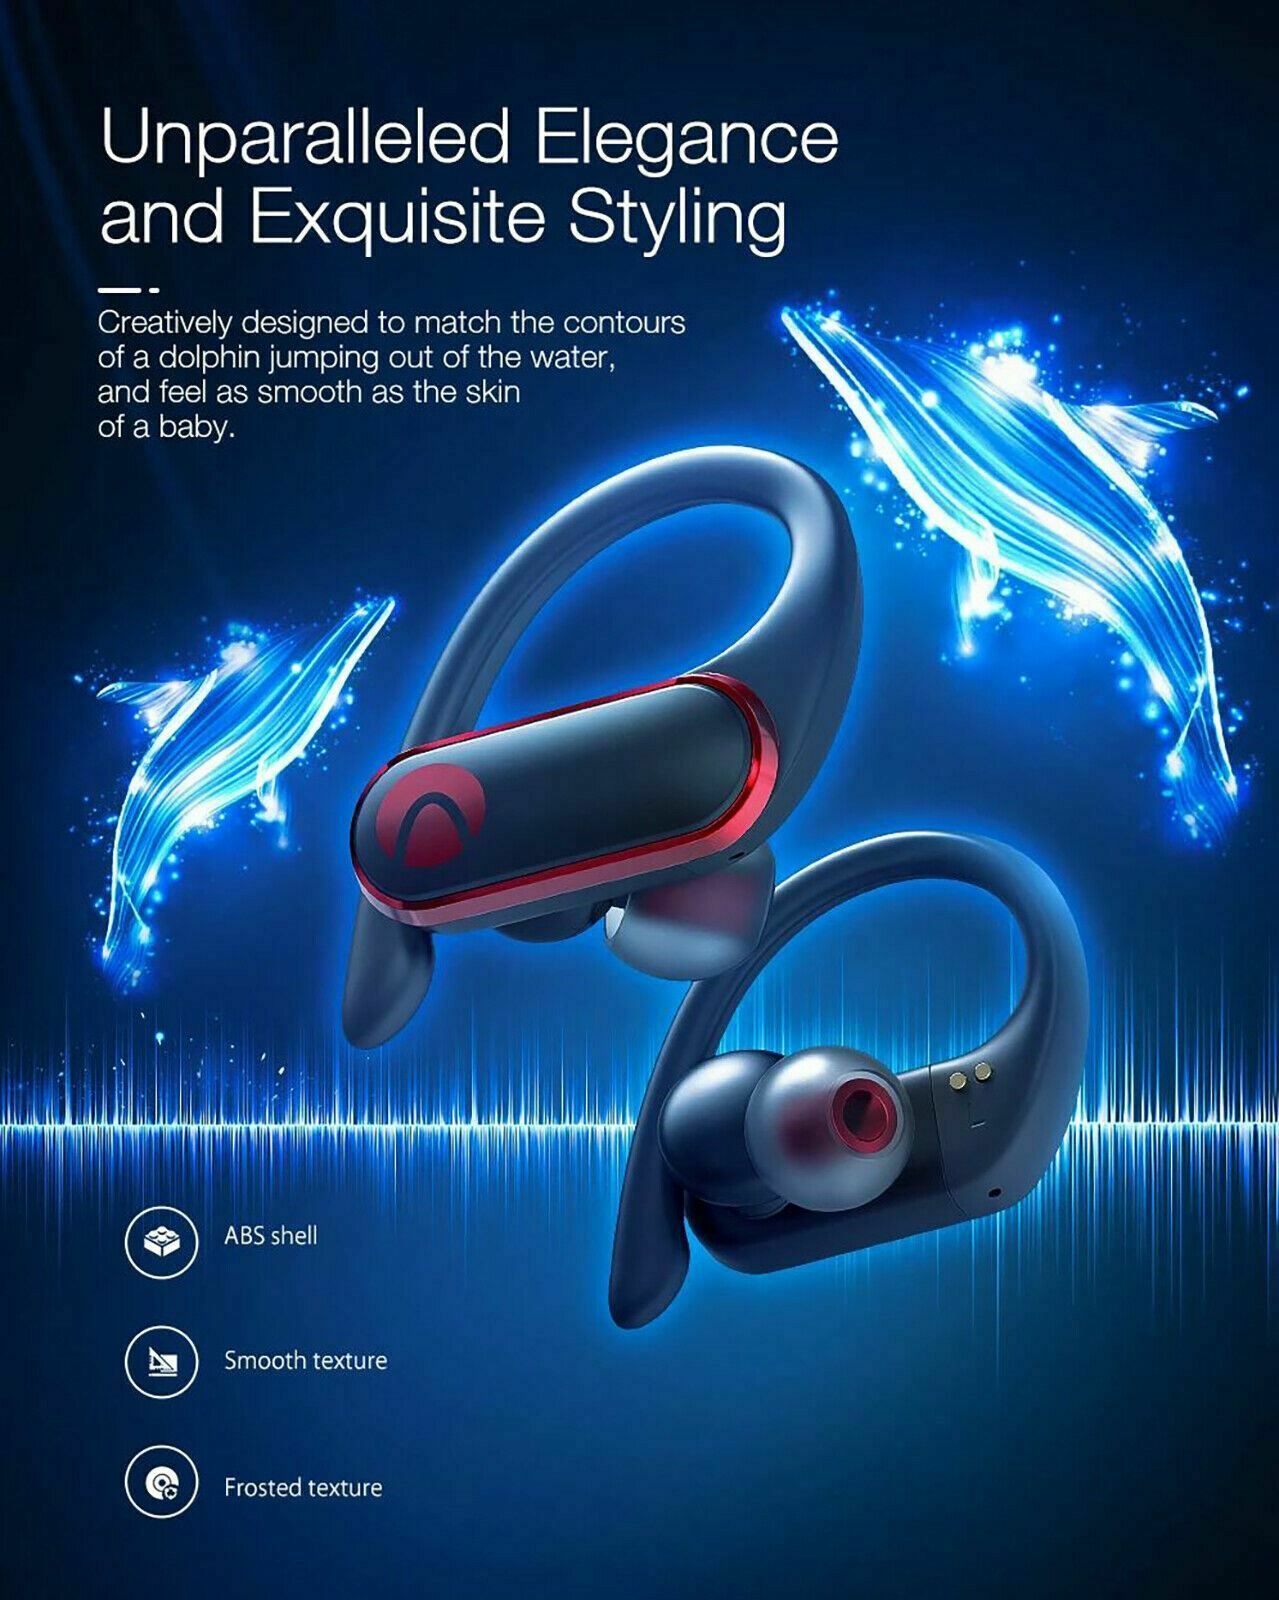 BlitzWolf AIRAUX Waterproof TWS Stereo Bluetooth 5.0 Earbuds Earphones Headset